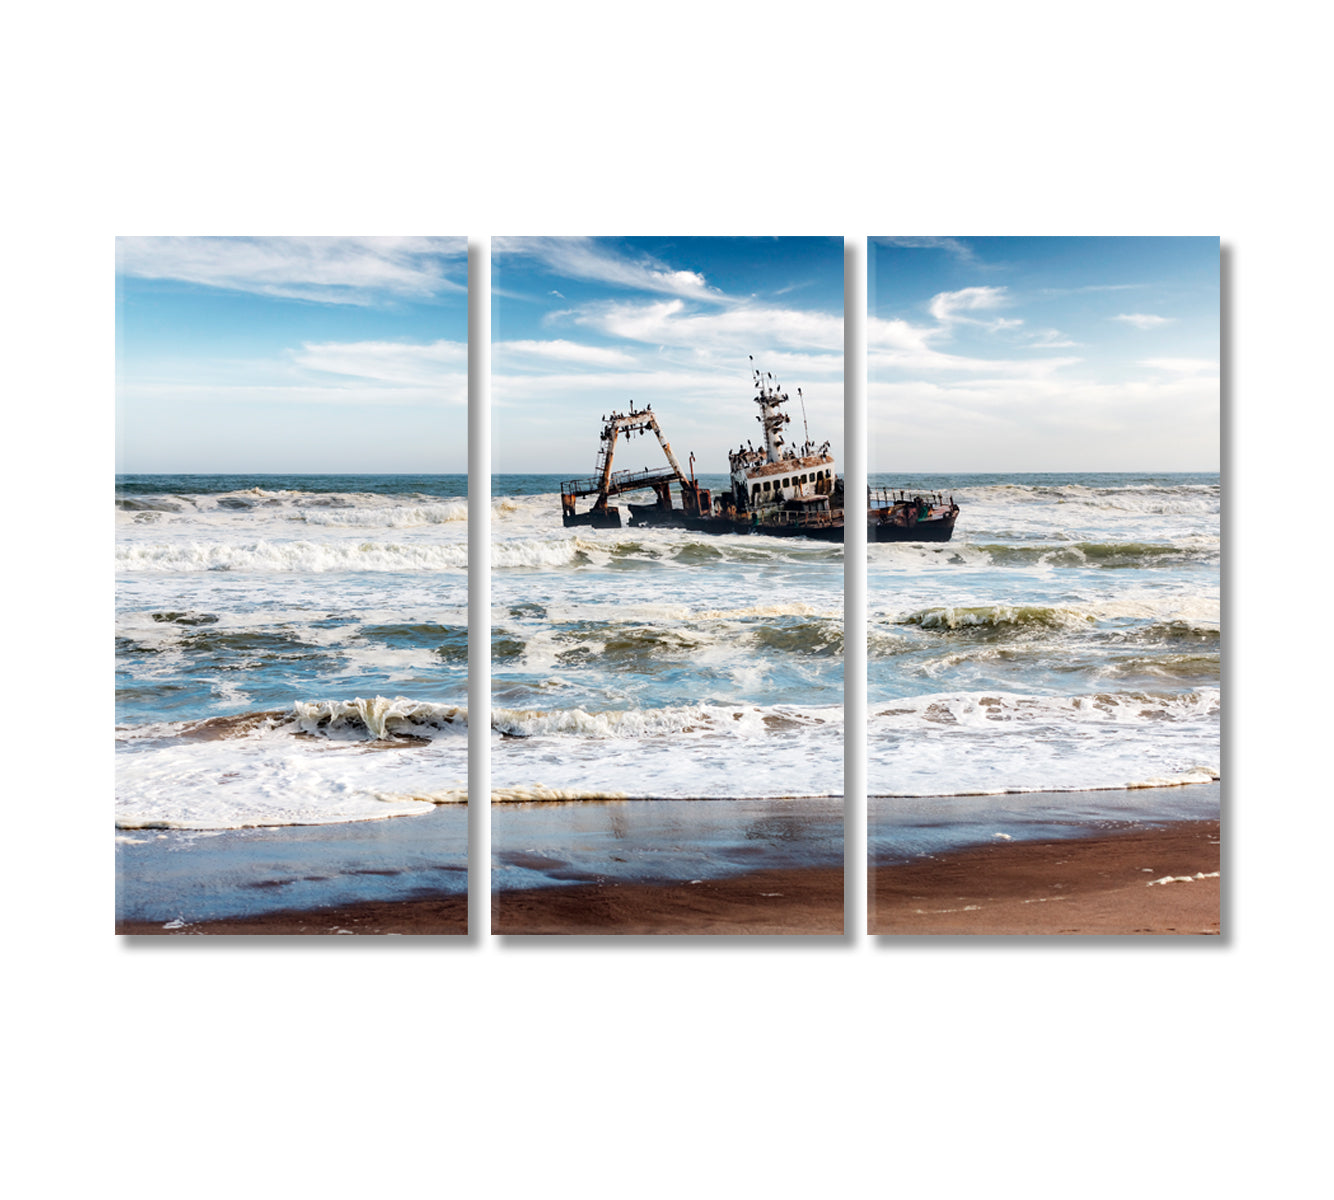 Shipwreck on Skeleton Coast in Atlantic Ocean Canvas Print-Canvas Print-CetArt-3 Panels-36x24 inches-CetArt